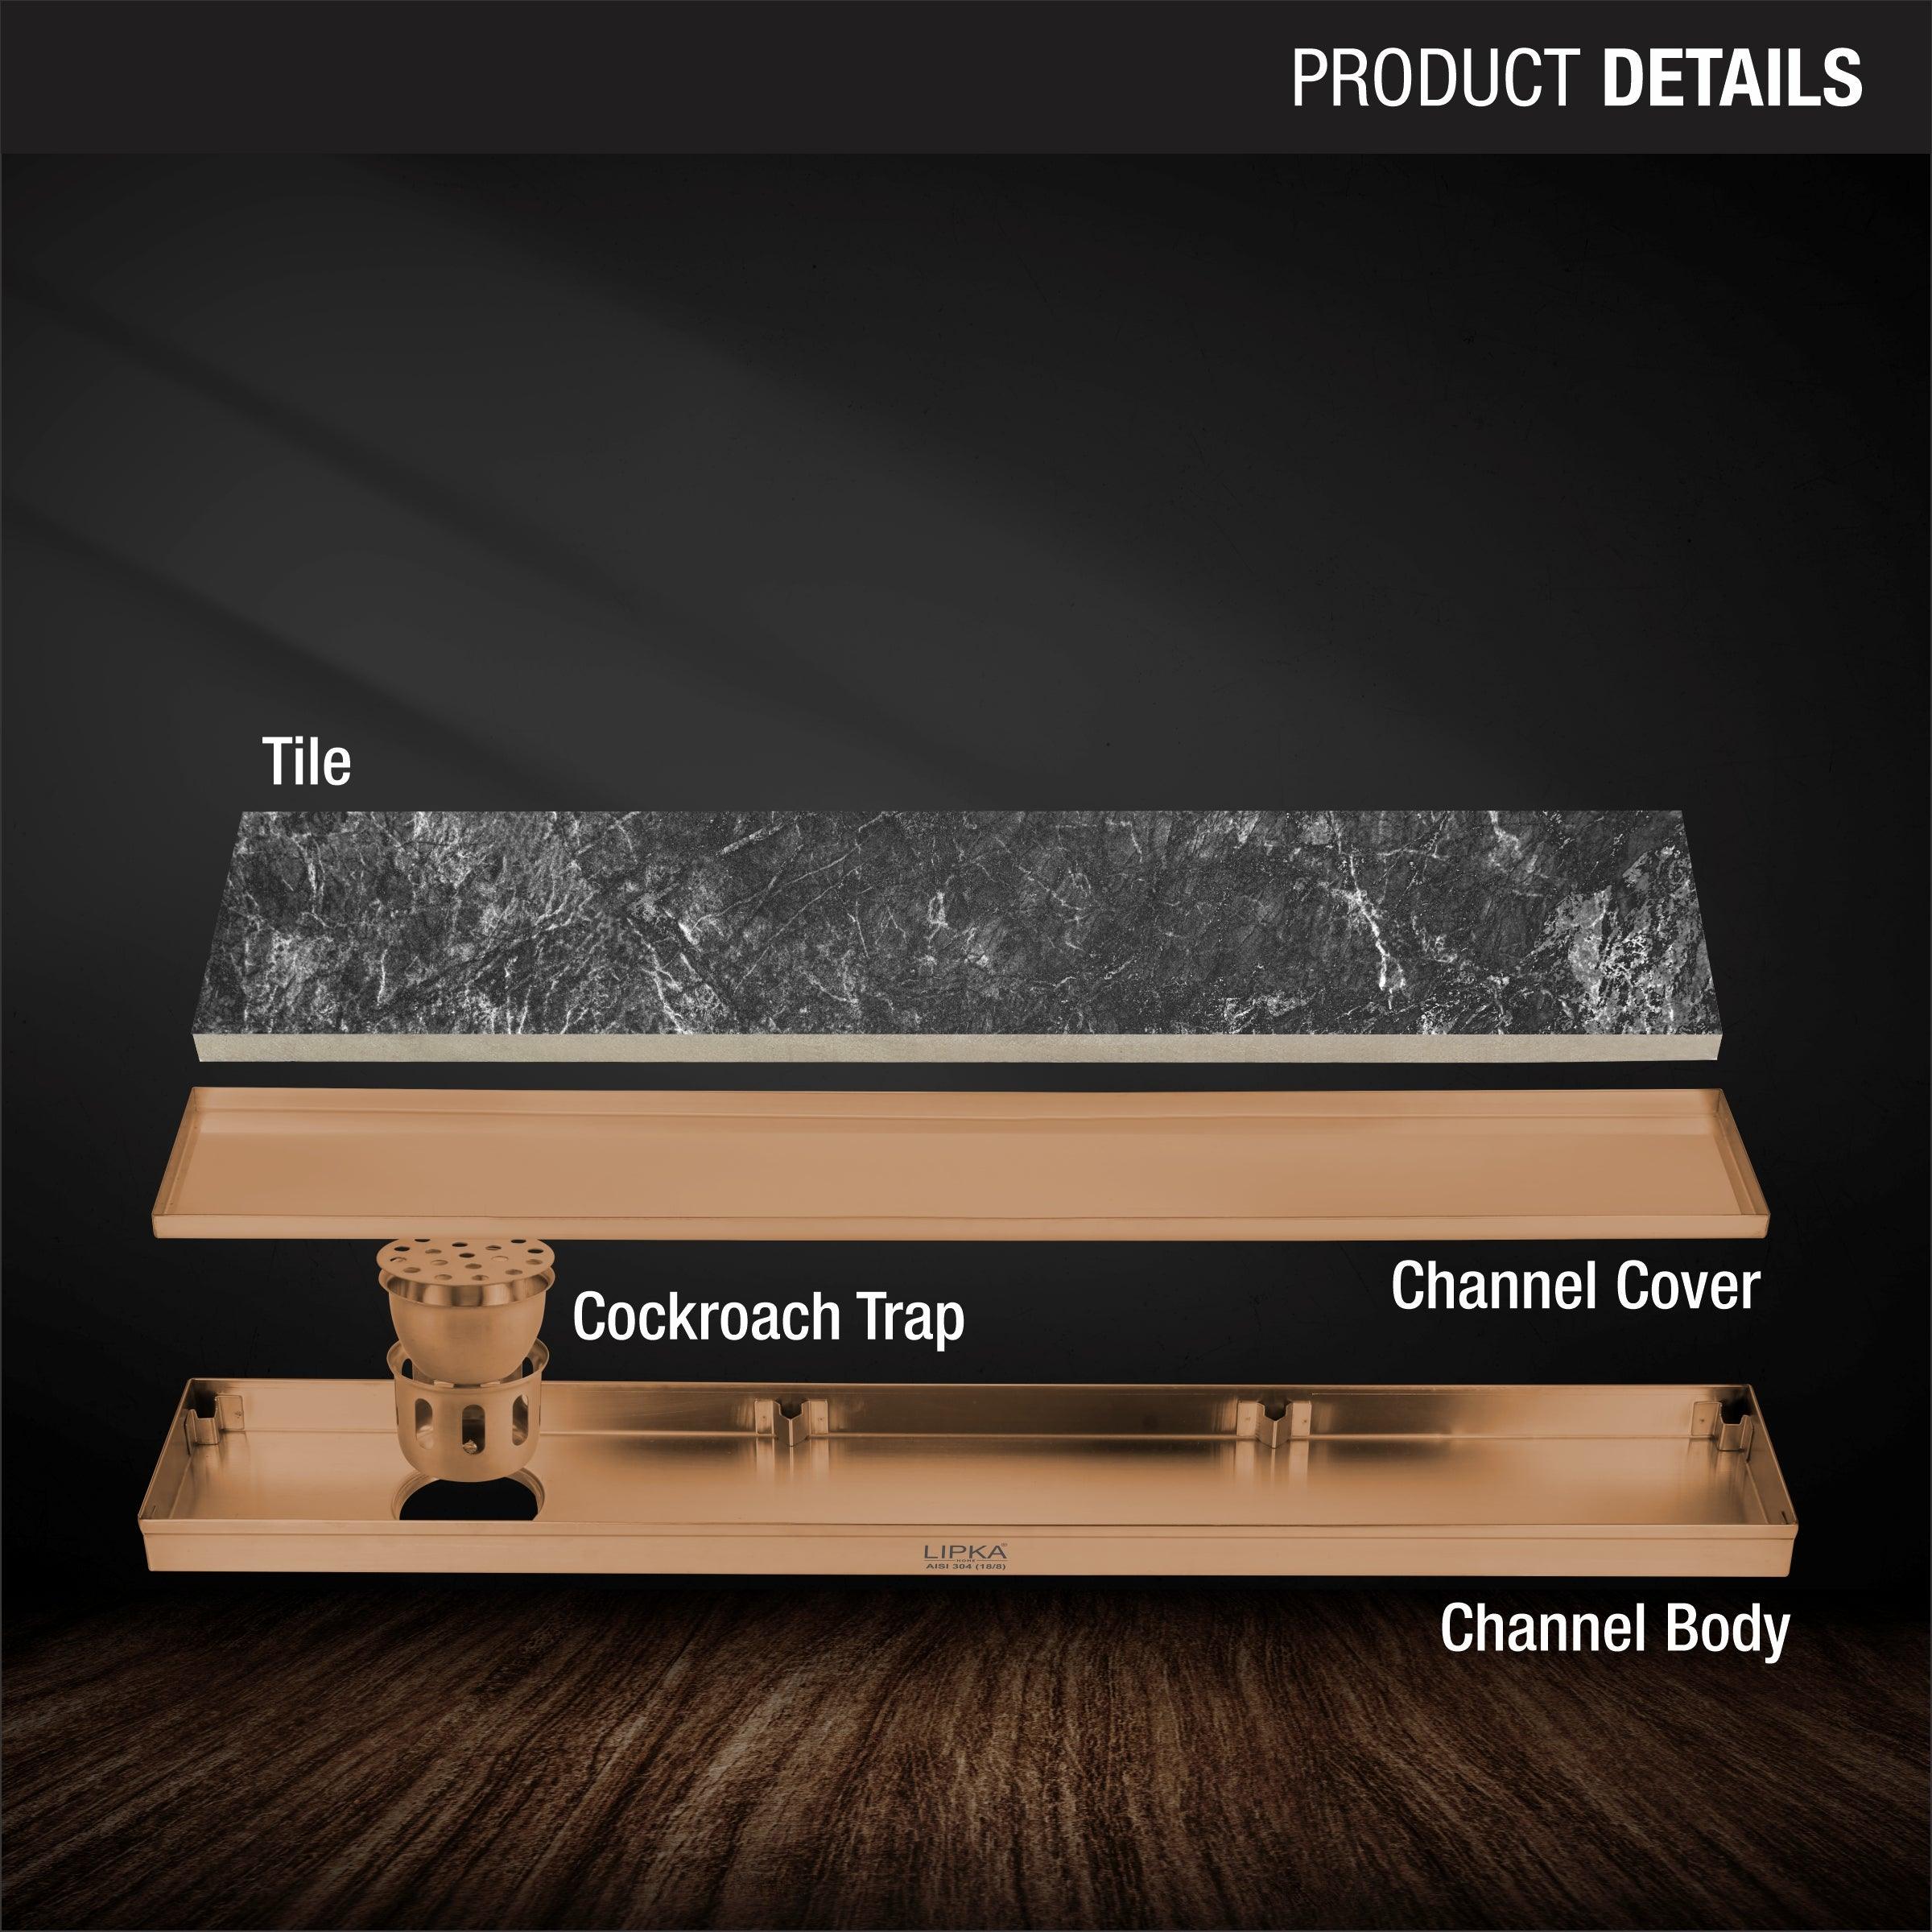 Tile Insert Shower Drain Channel - Antique Copper (36 x 4 Inches) product details